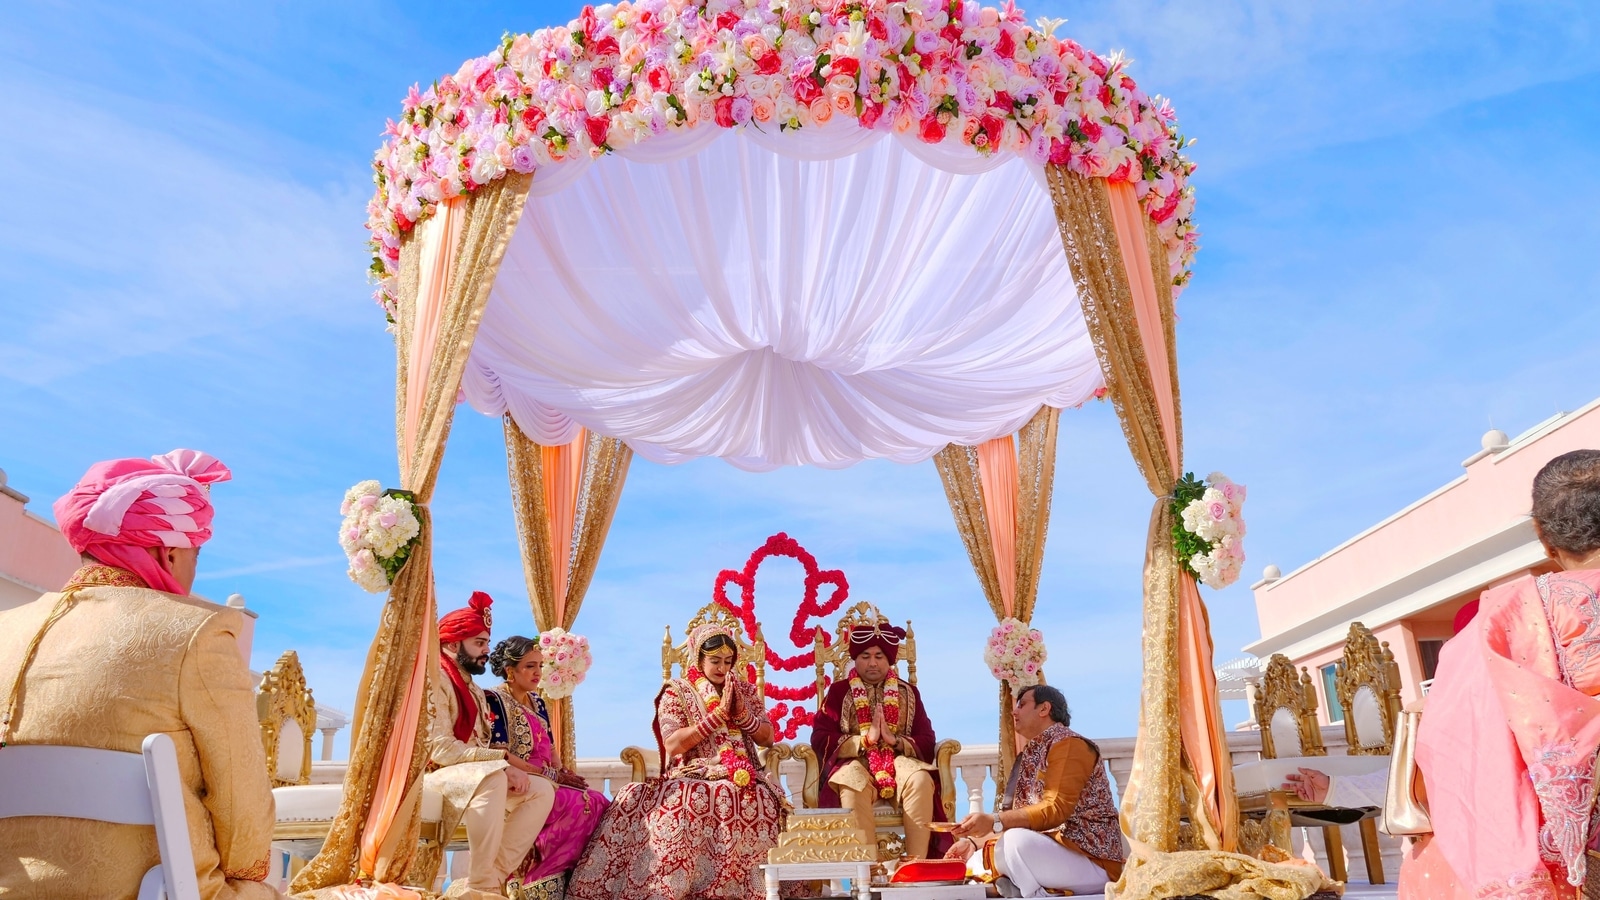 Trendy Pastel Wedding Decor Ideas To Glam Up Your Wedding Theme